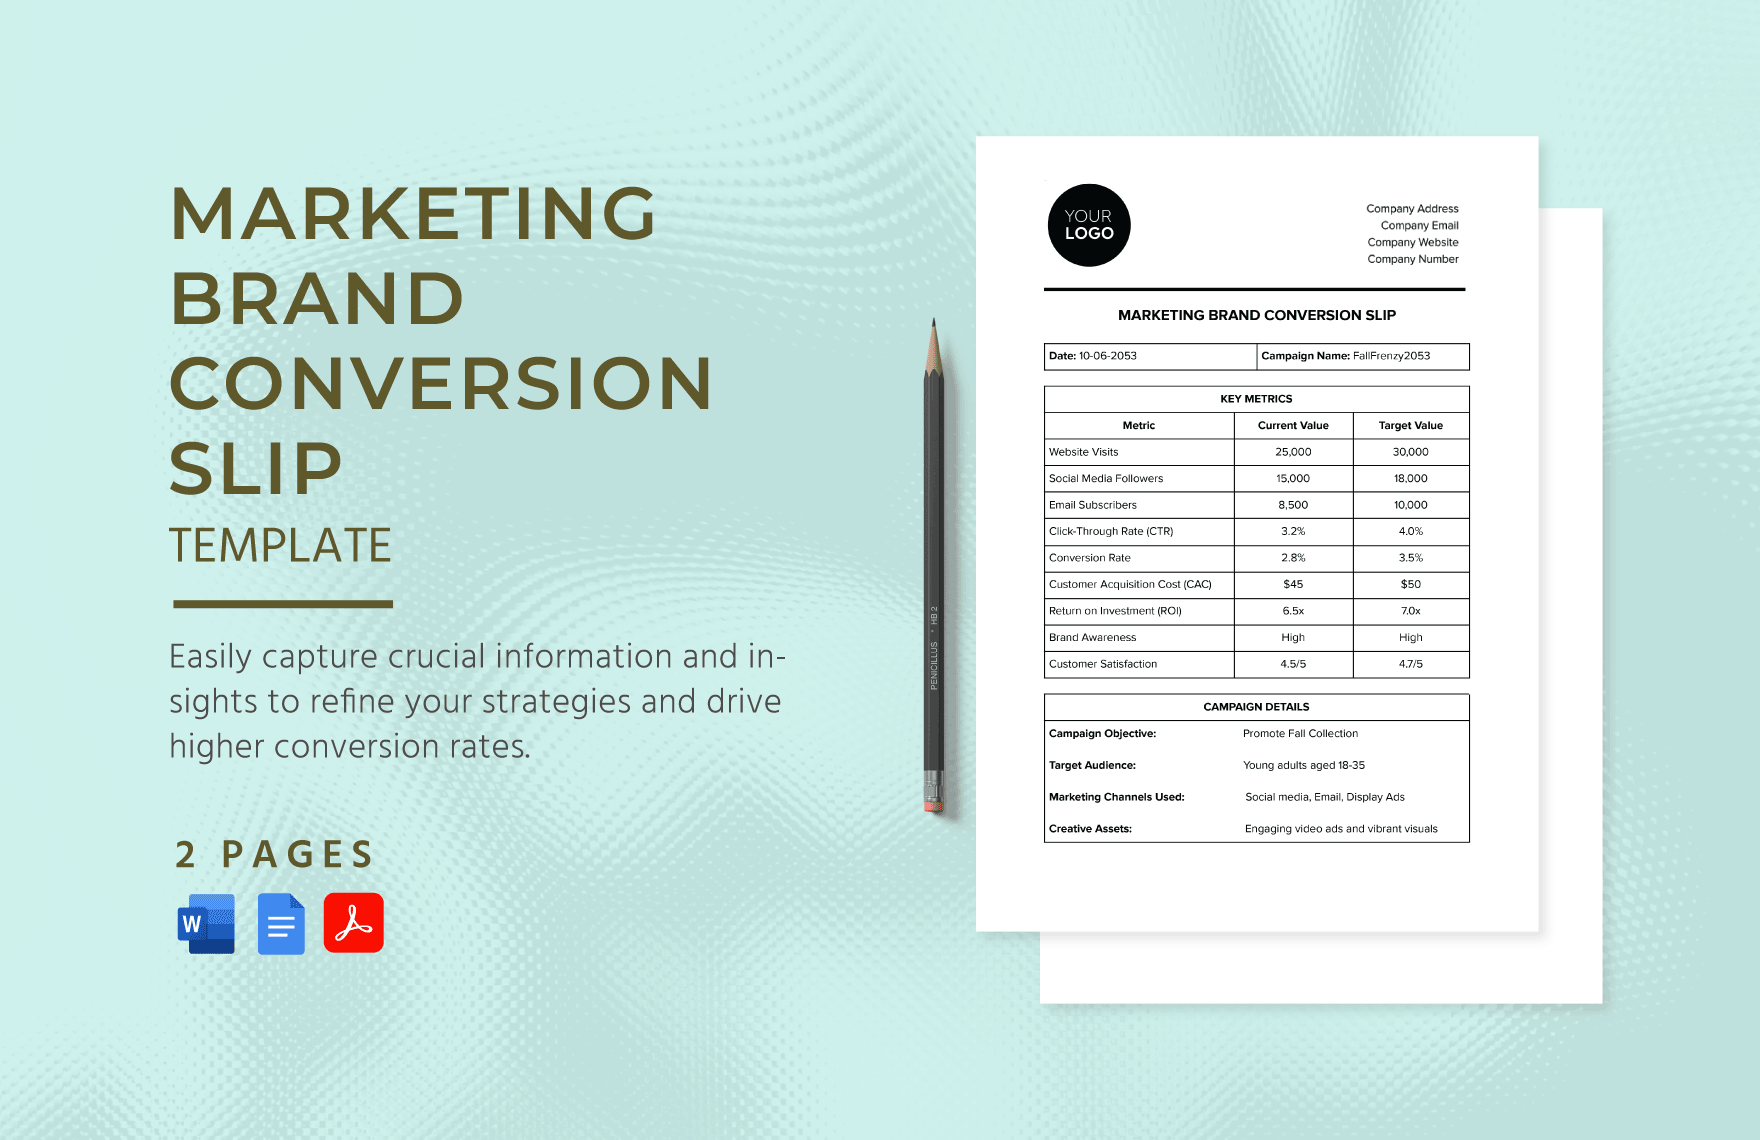 Marketing Brand Conversion Slip Template in Word, Google Docs, PDF